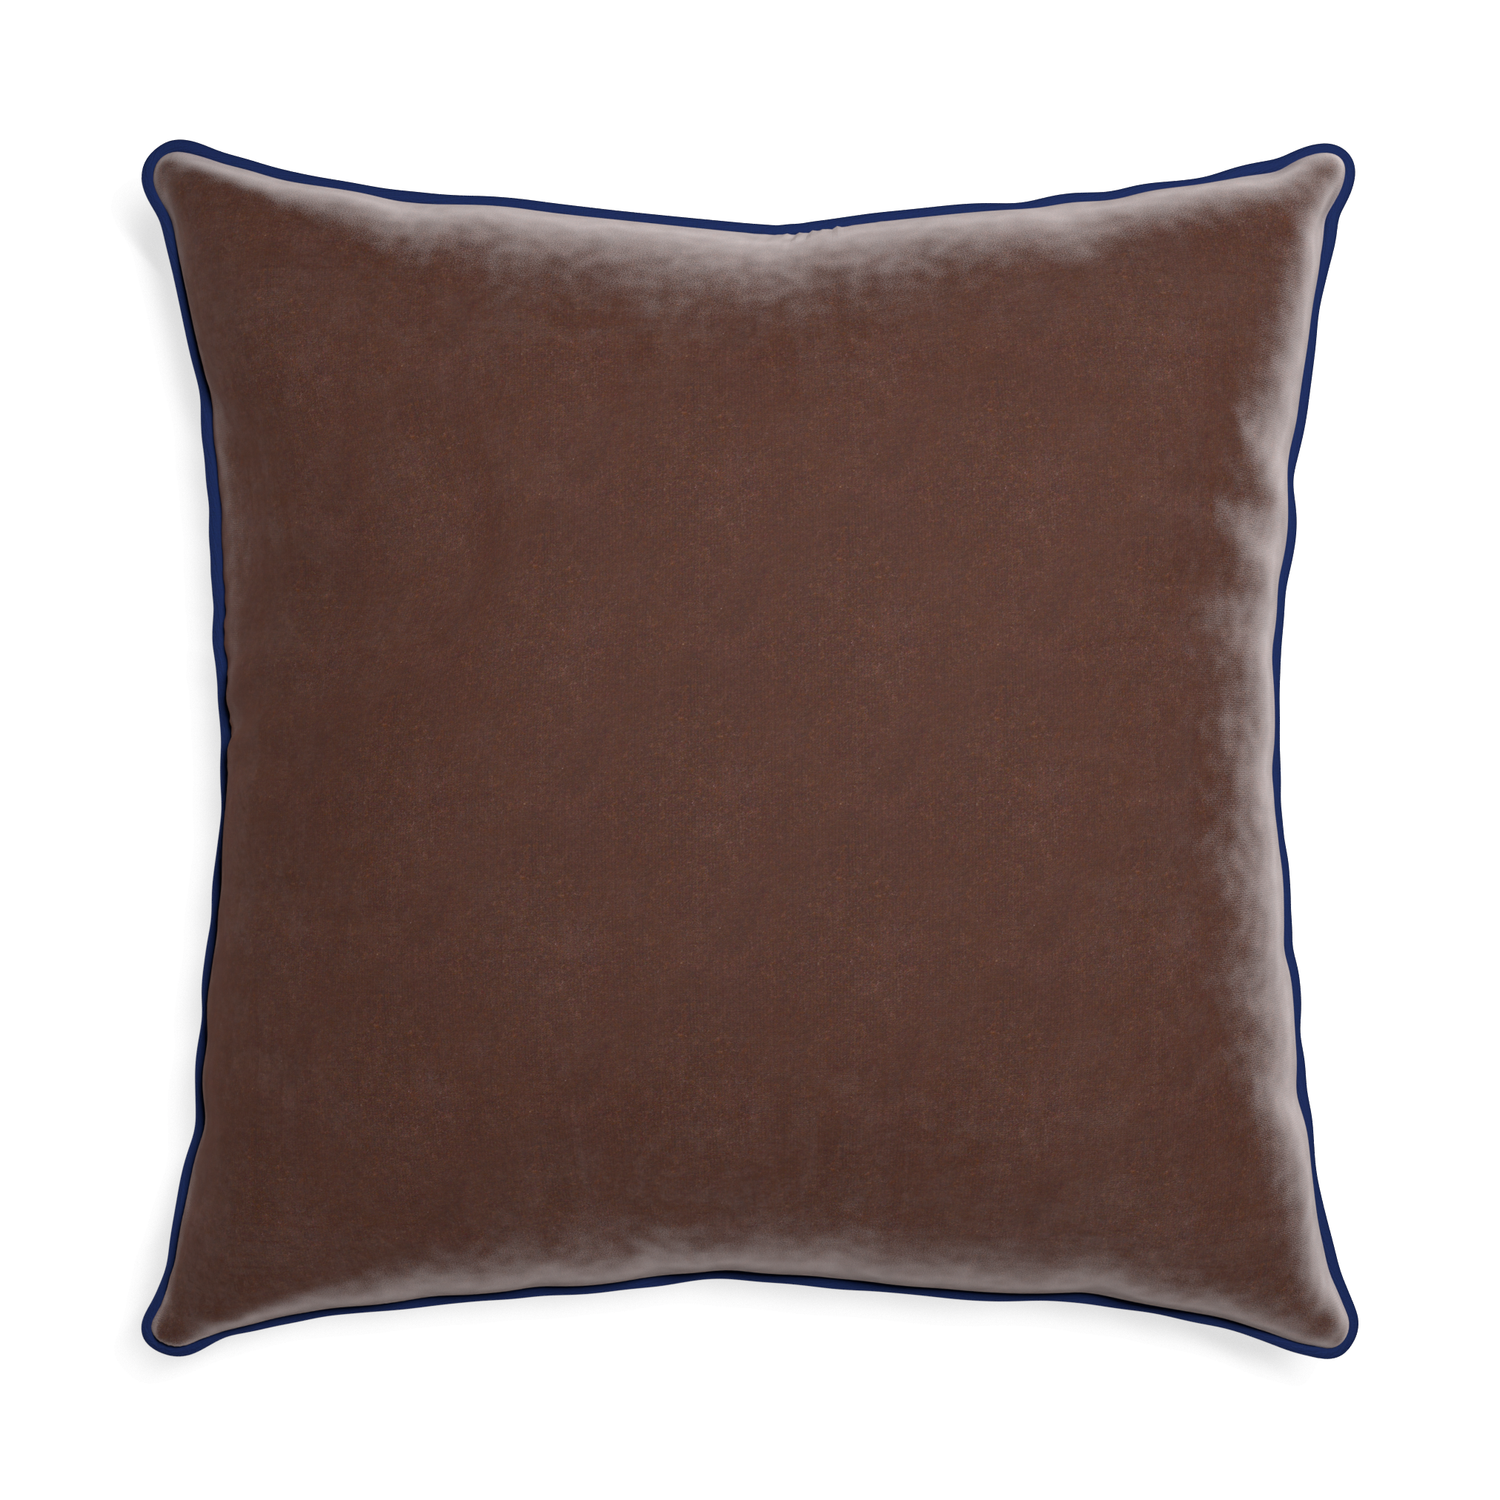 Euro-sham walnut velvet custom pillow with midnight piping on white background